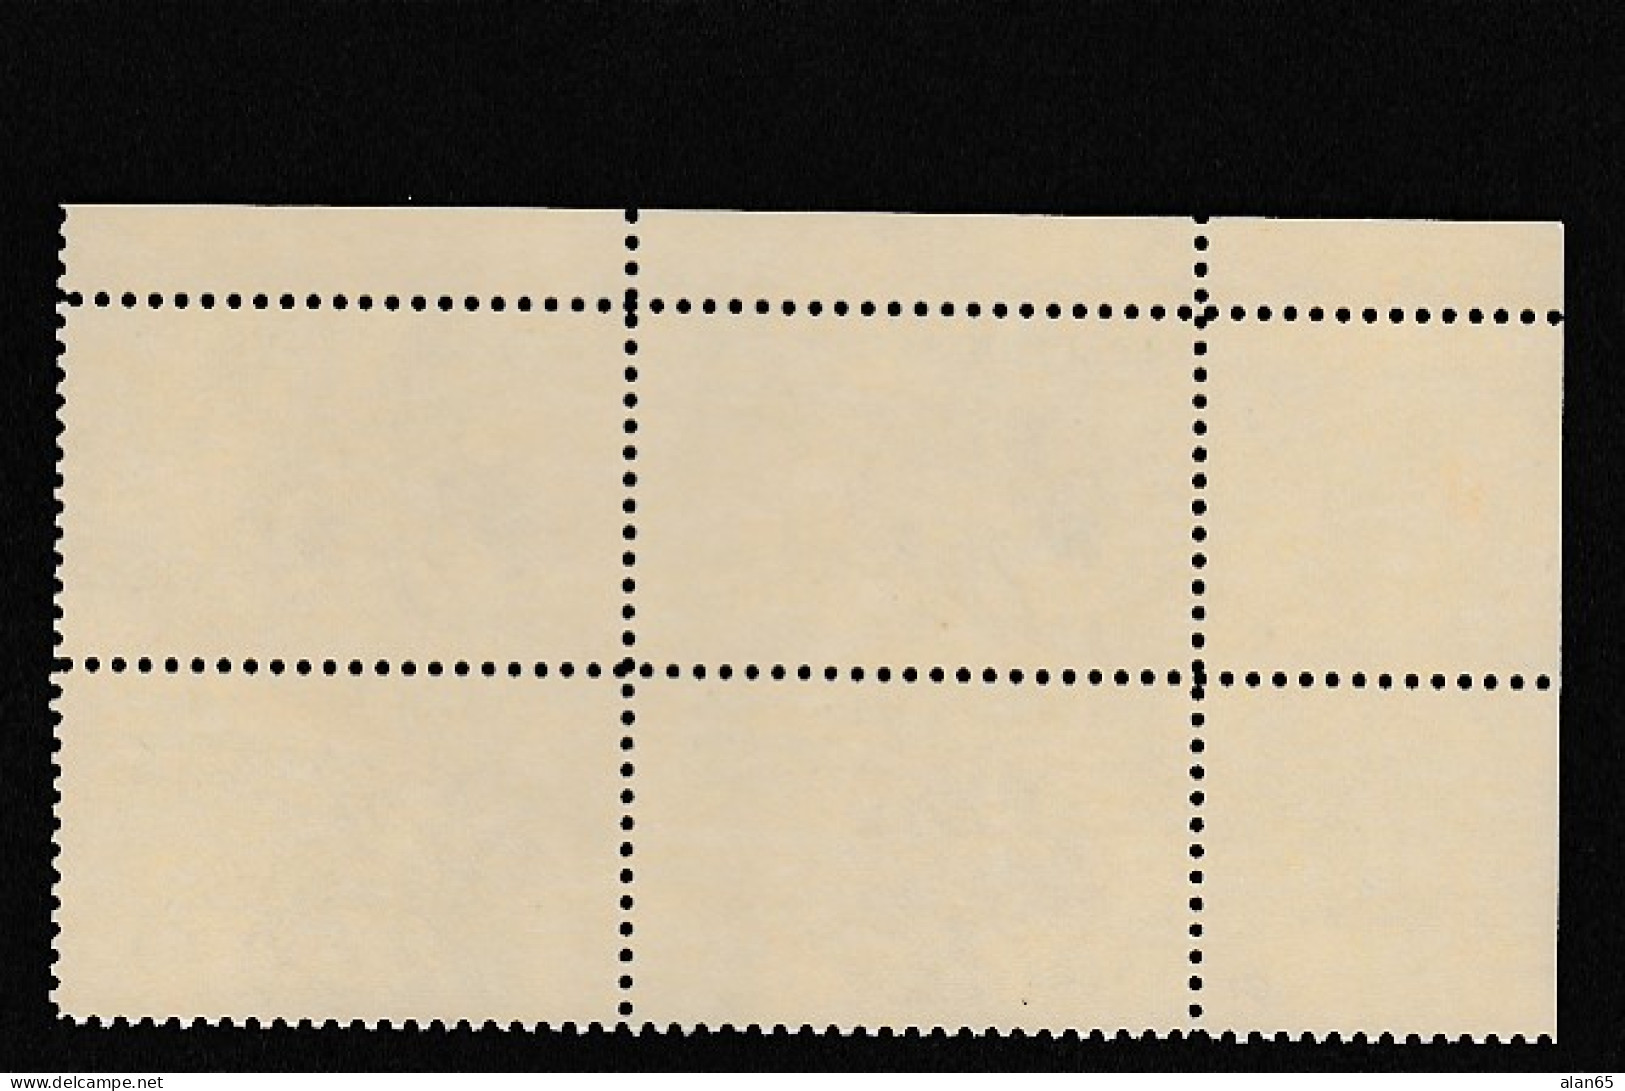 Sc#1934, Plate # Block Of 4 18-cent, Frederic Remington American Sculptor, US Postage Stamps - Plattennummern